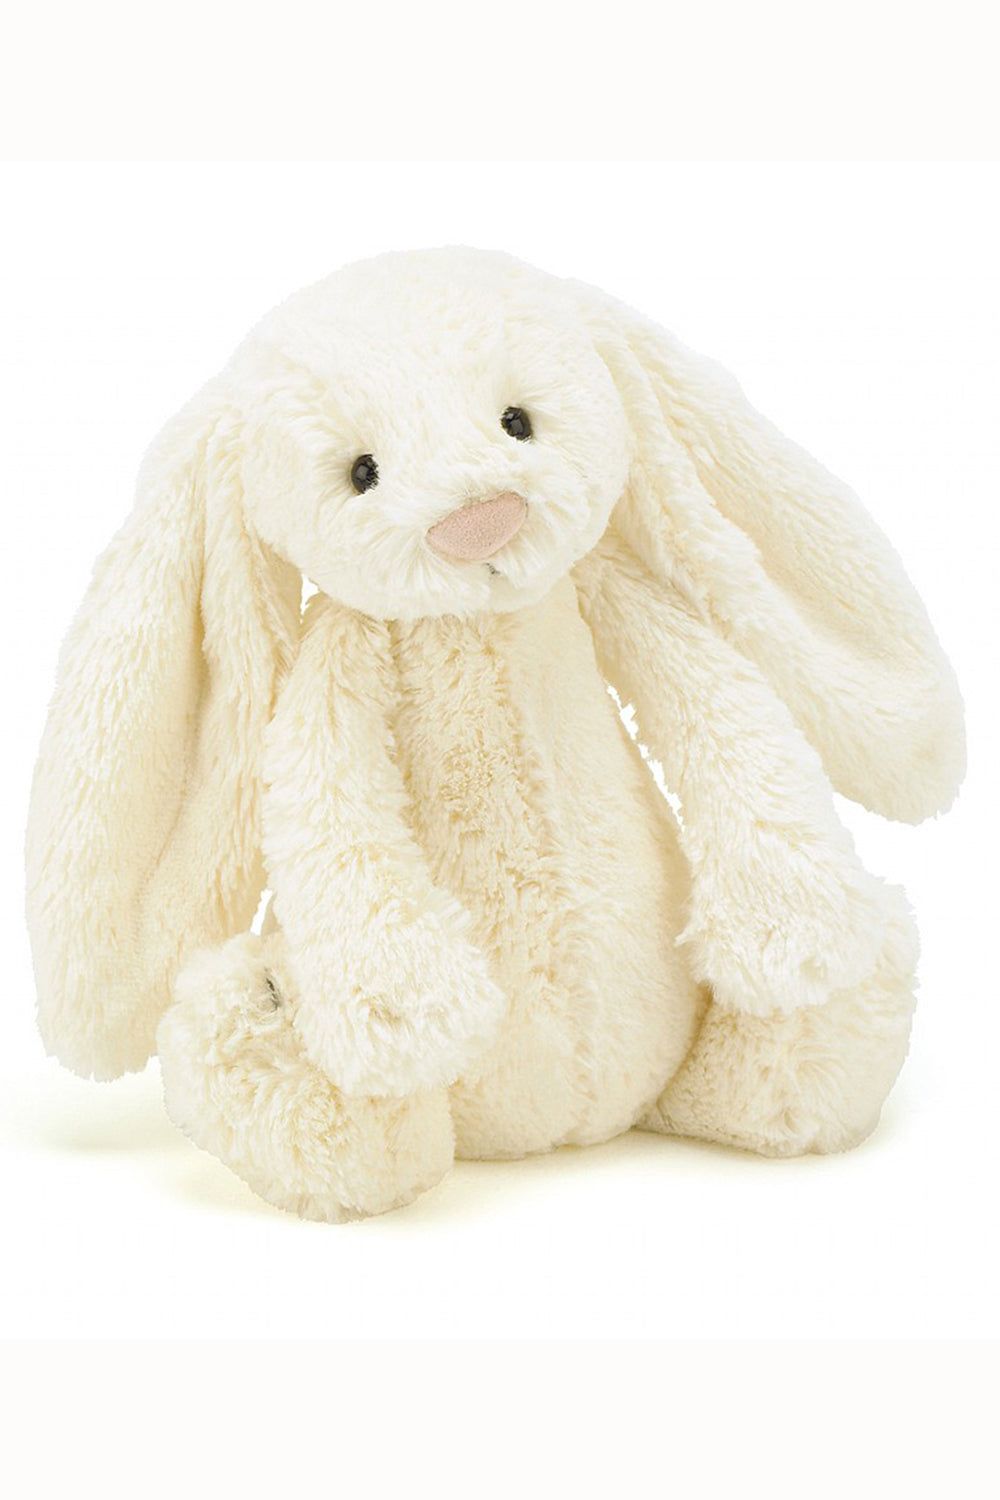 JELLYCAT Bashful Bunny - Cream